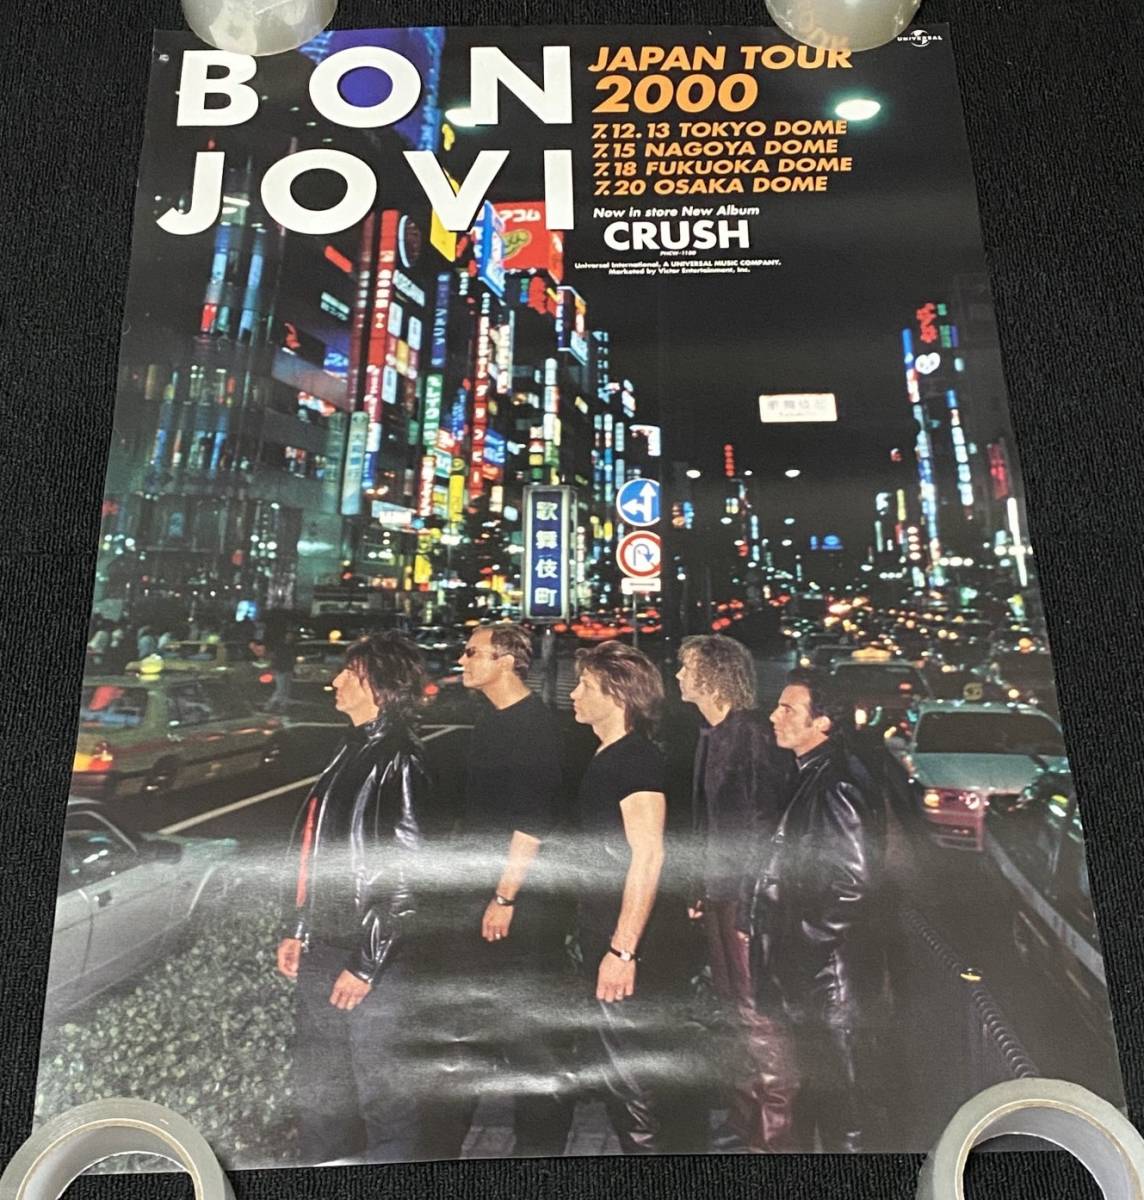 6808/bon* jovi постер /JAPAN TOUR 2000 CRUSH BON JOVI / B2 размер 